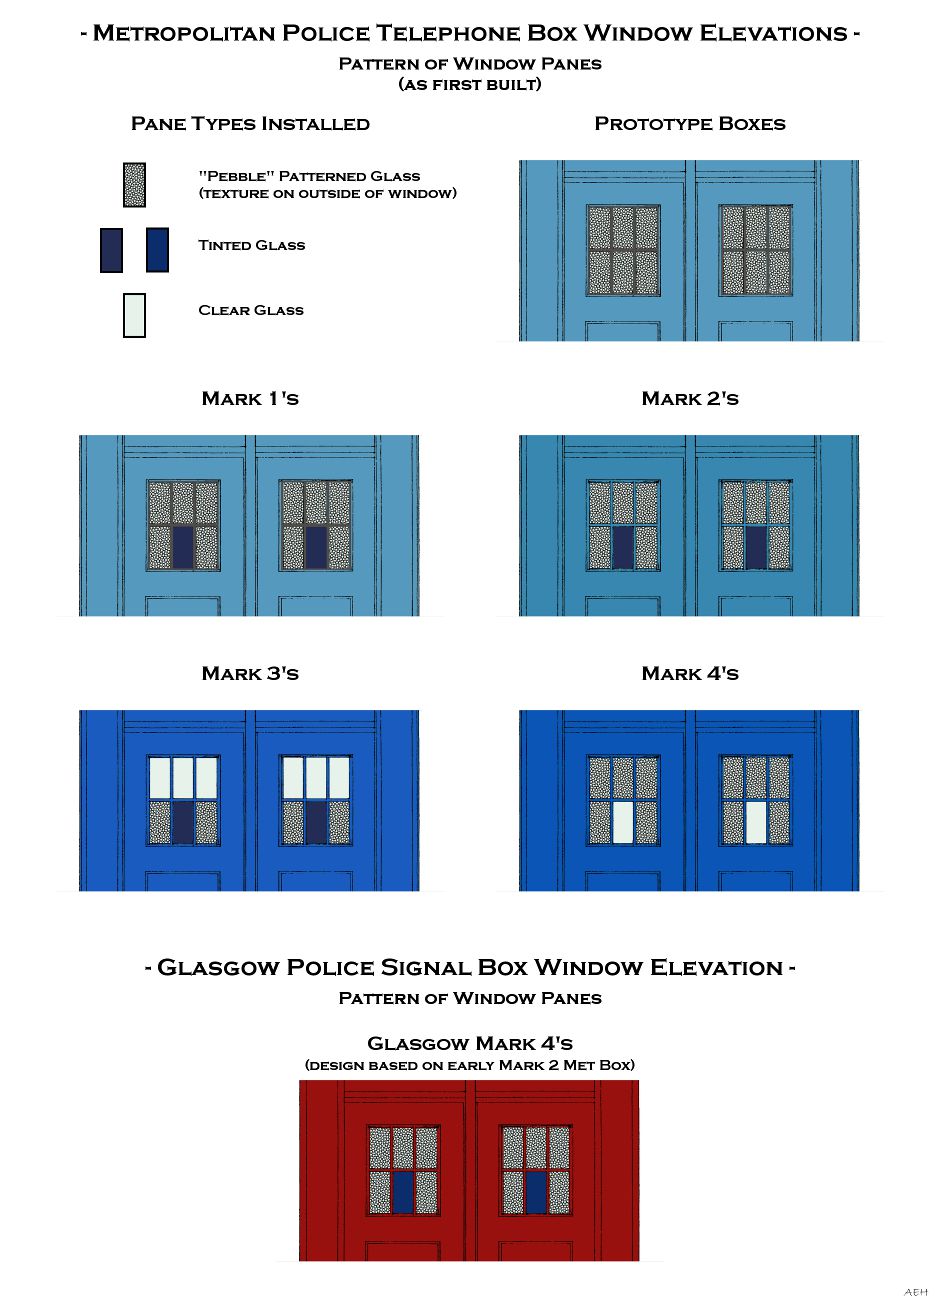 Met_&_Glasgow_Window_Pane_Pattern_Elevations-Reduced_Size_Chart.jpg